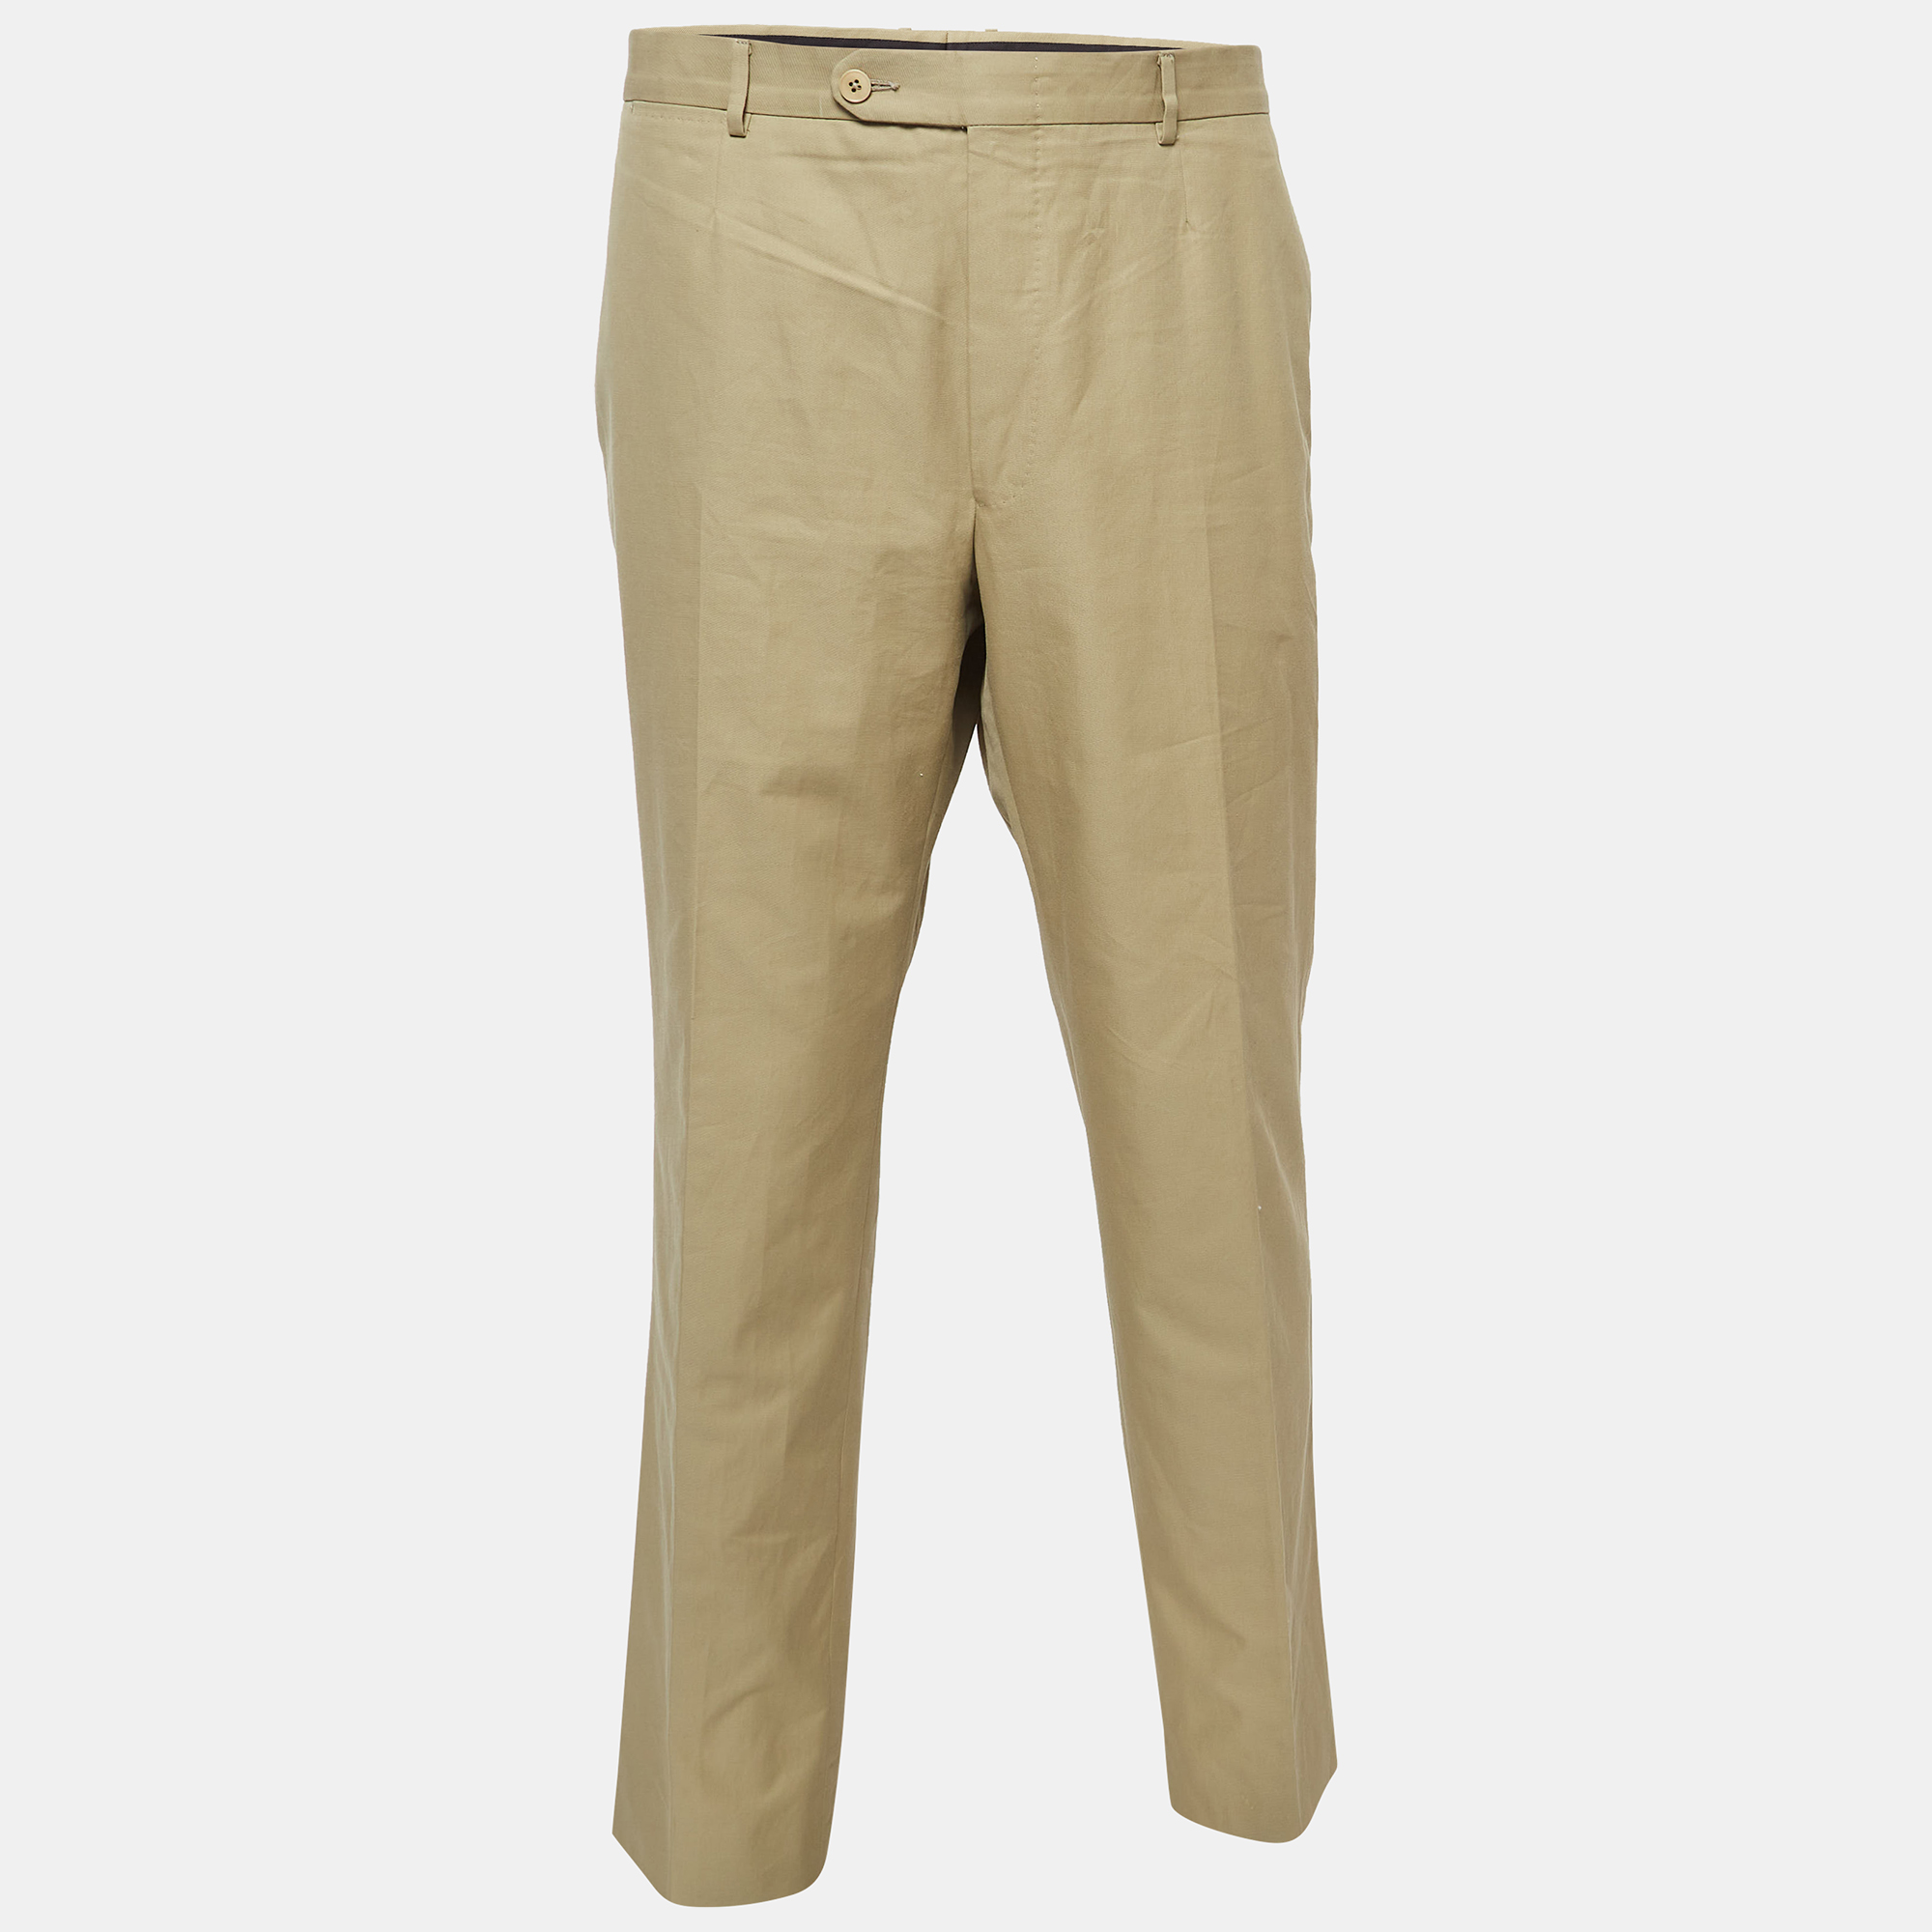 Ermenegildo zegna zegna su misura light brown cotton trousers xxl